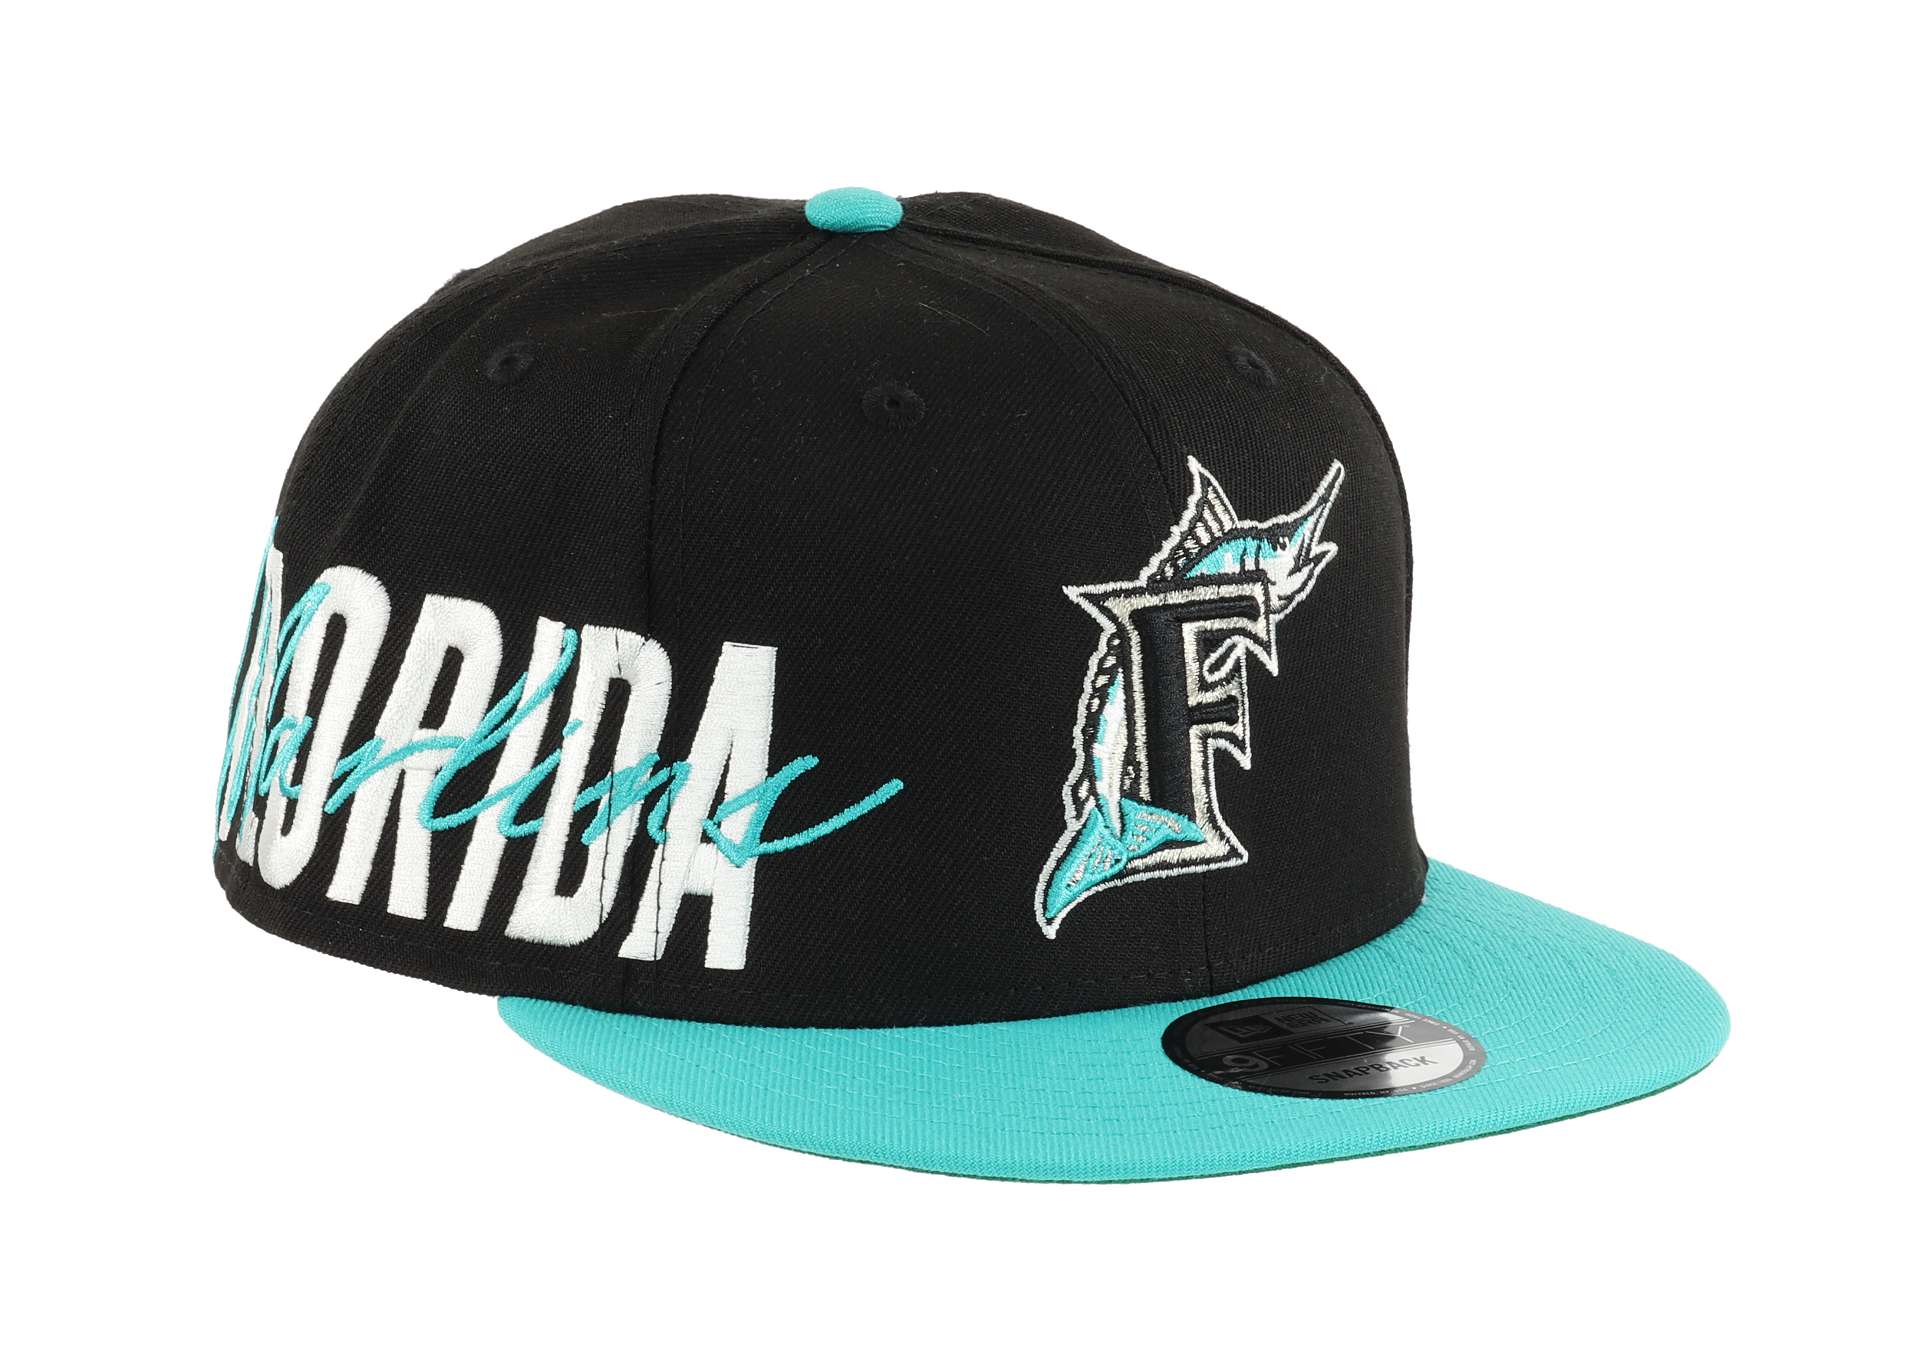 Florida Marlins Sidefont Black / Turquoise 9Fifty Snapback Cap New Era